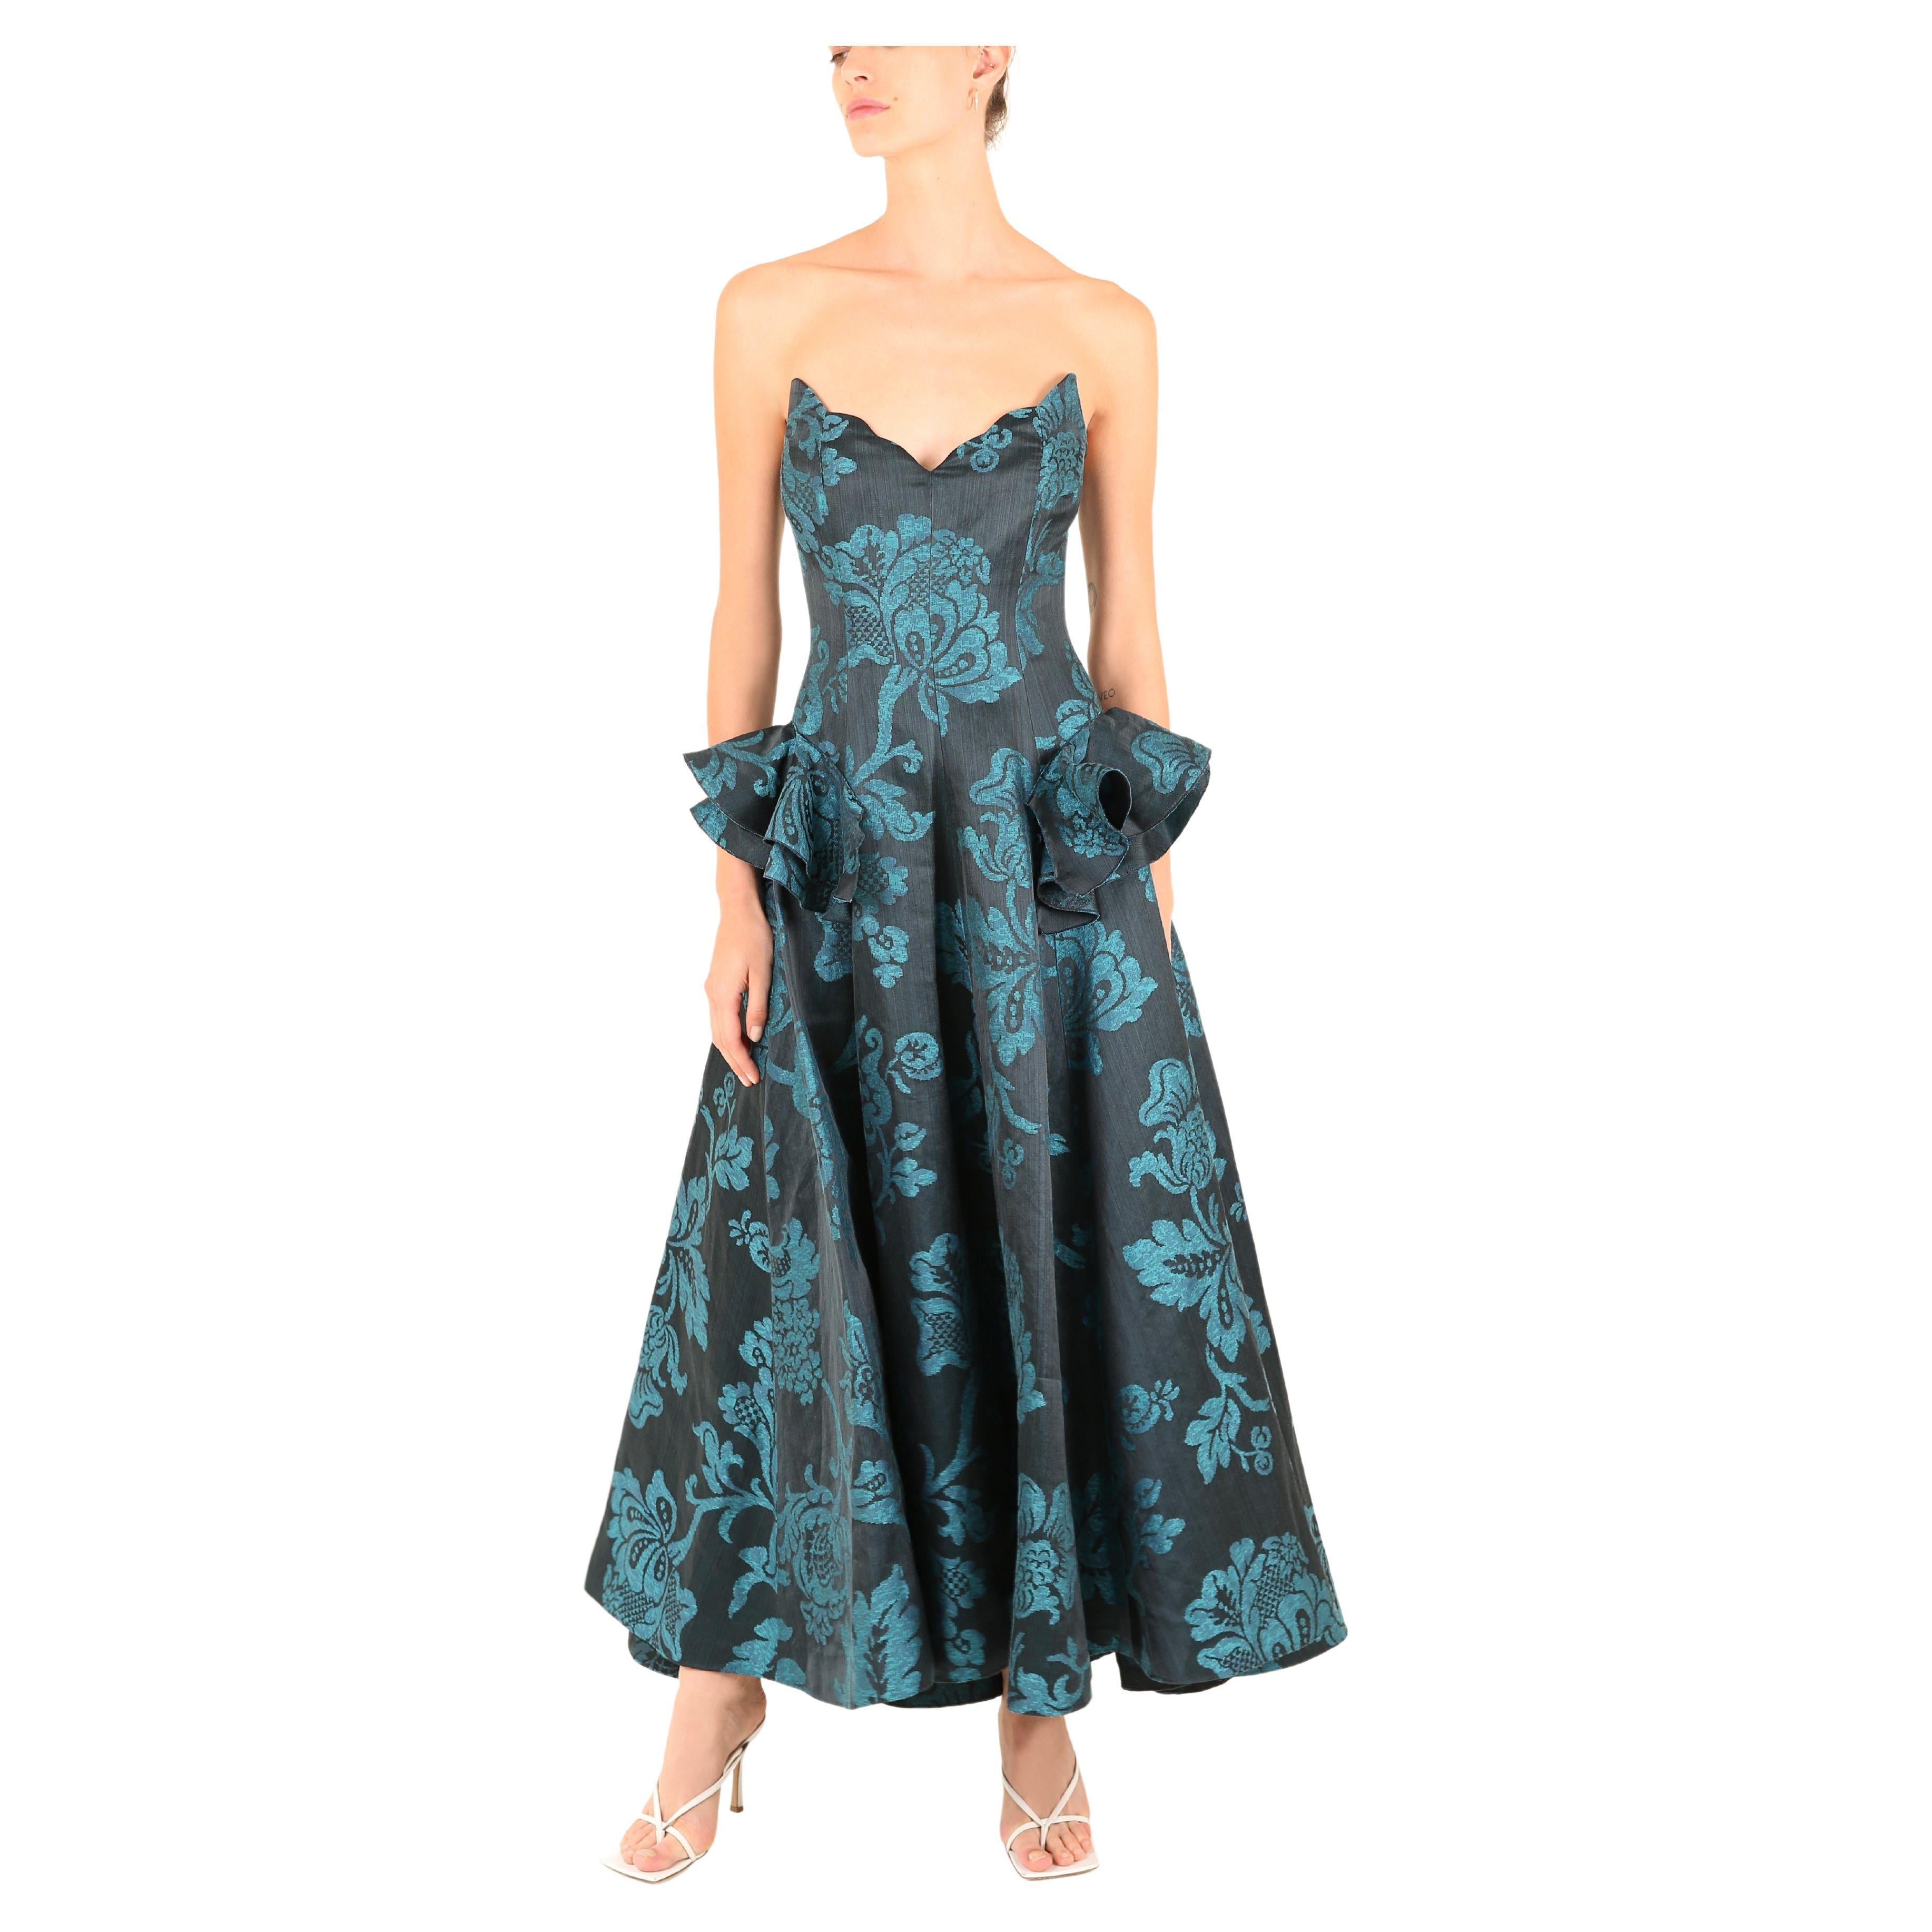 Oscar de la Renta F/W06 strapless floral blue teal fit and flare dress gown XS